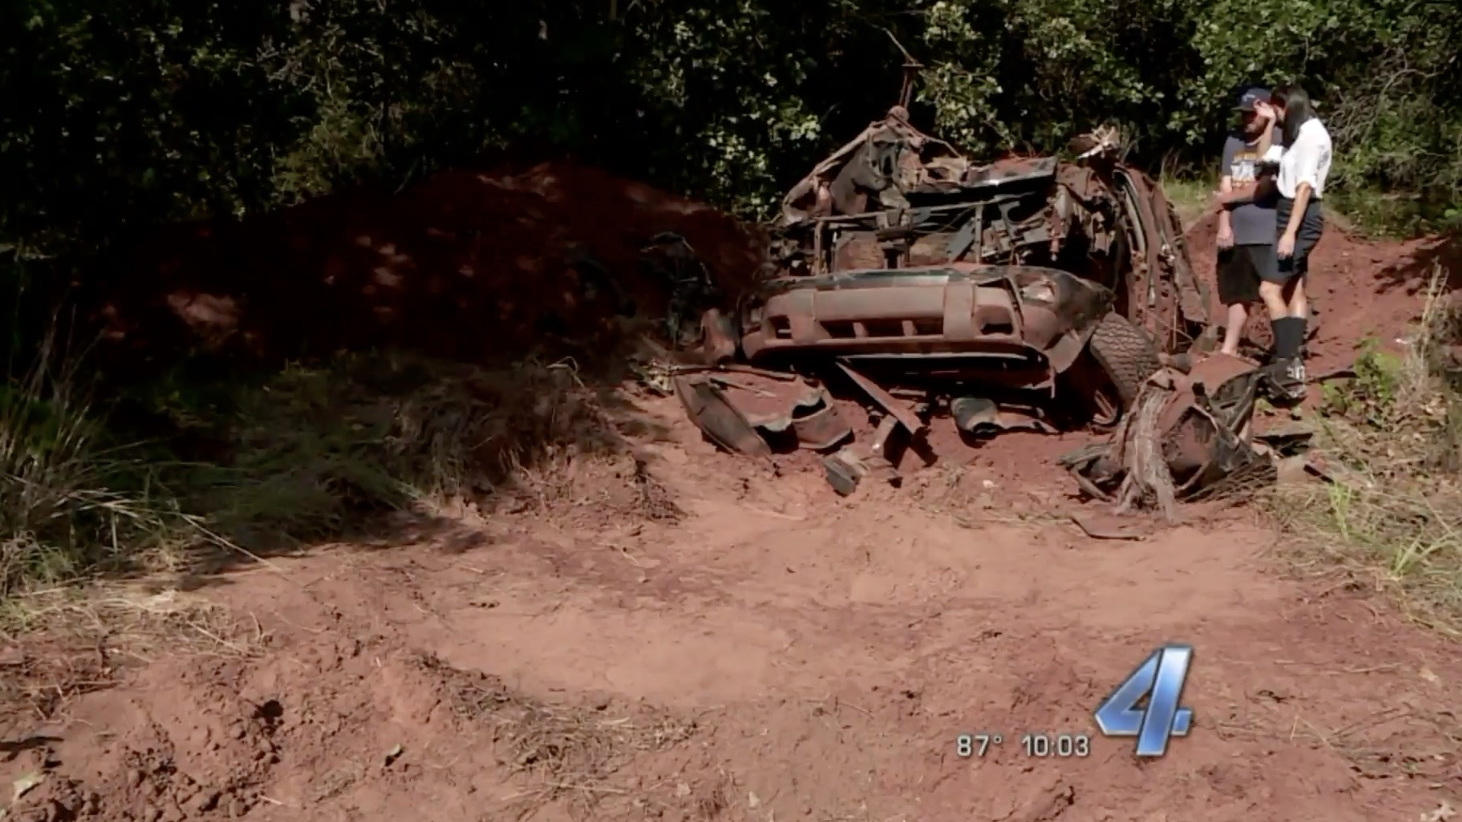 2003 Chevrolet Trailblazer found buried